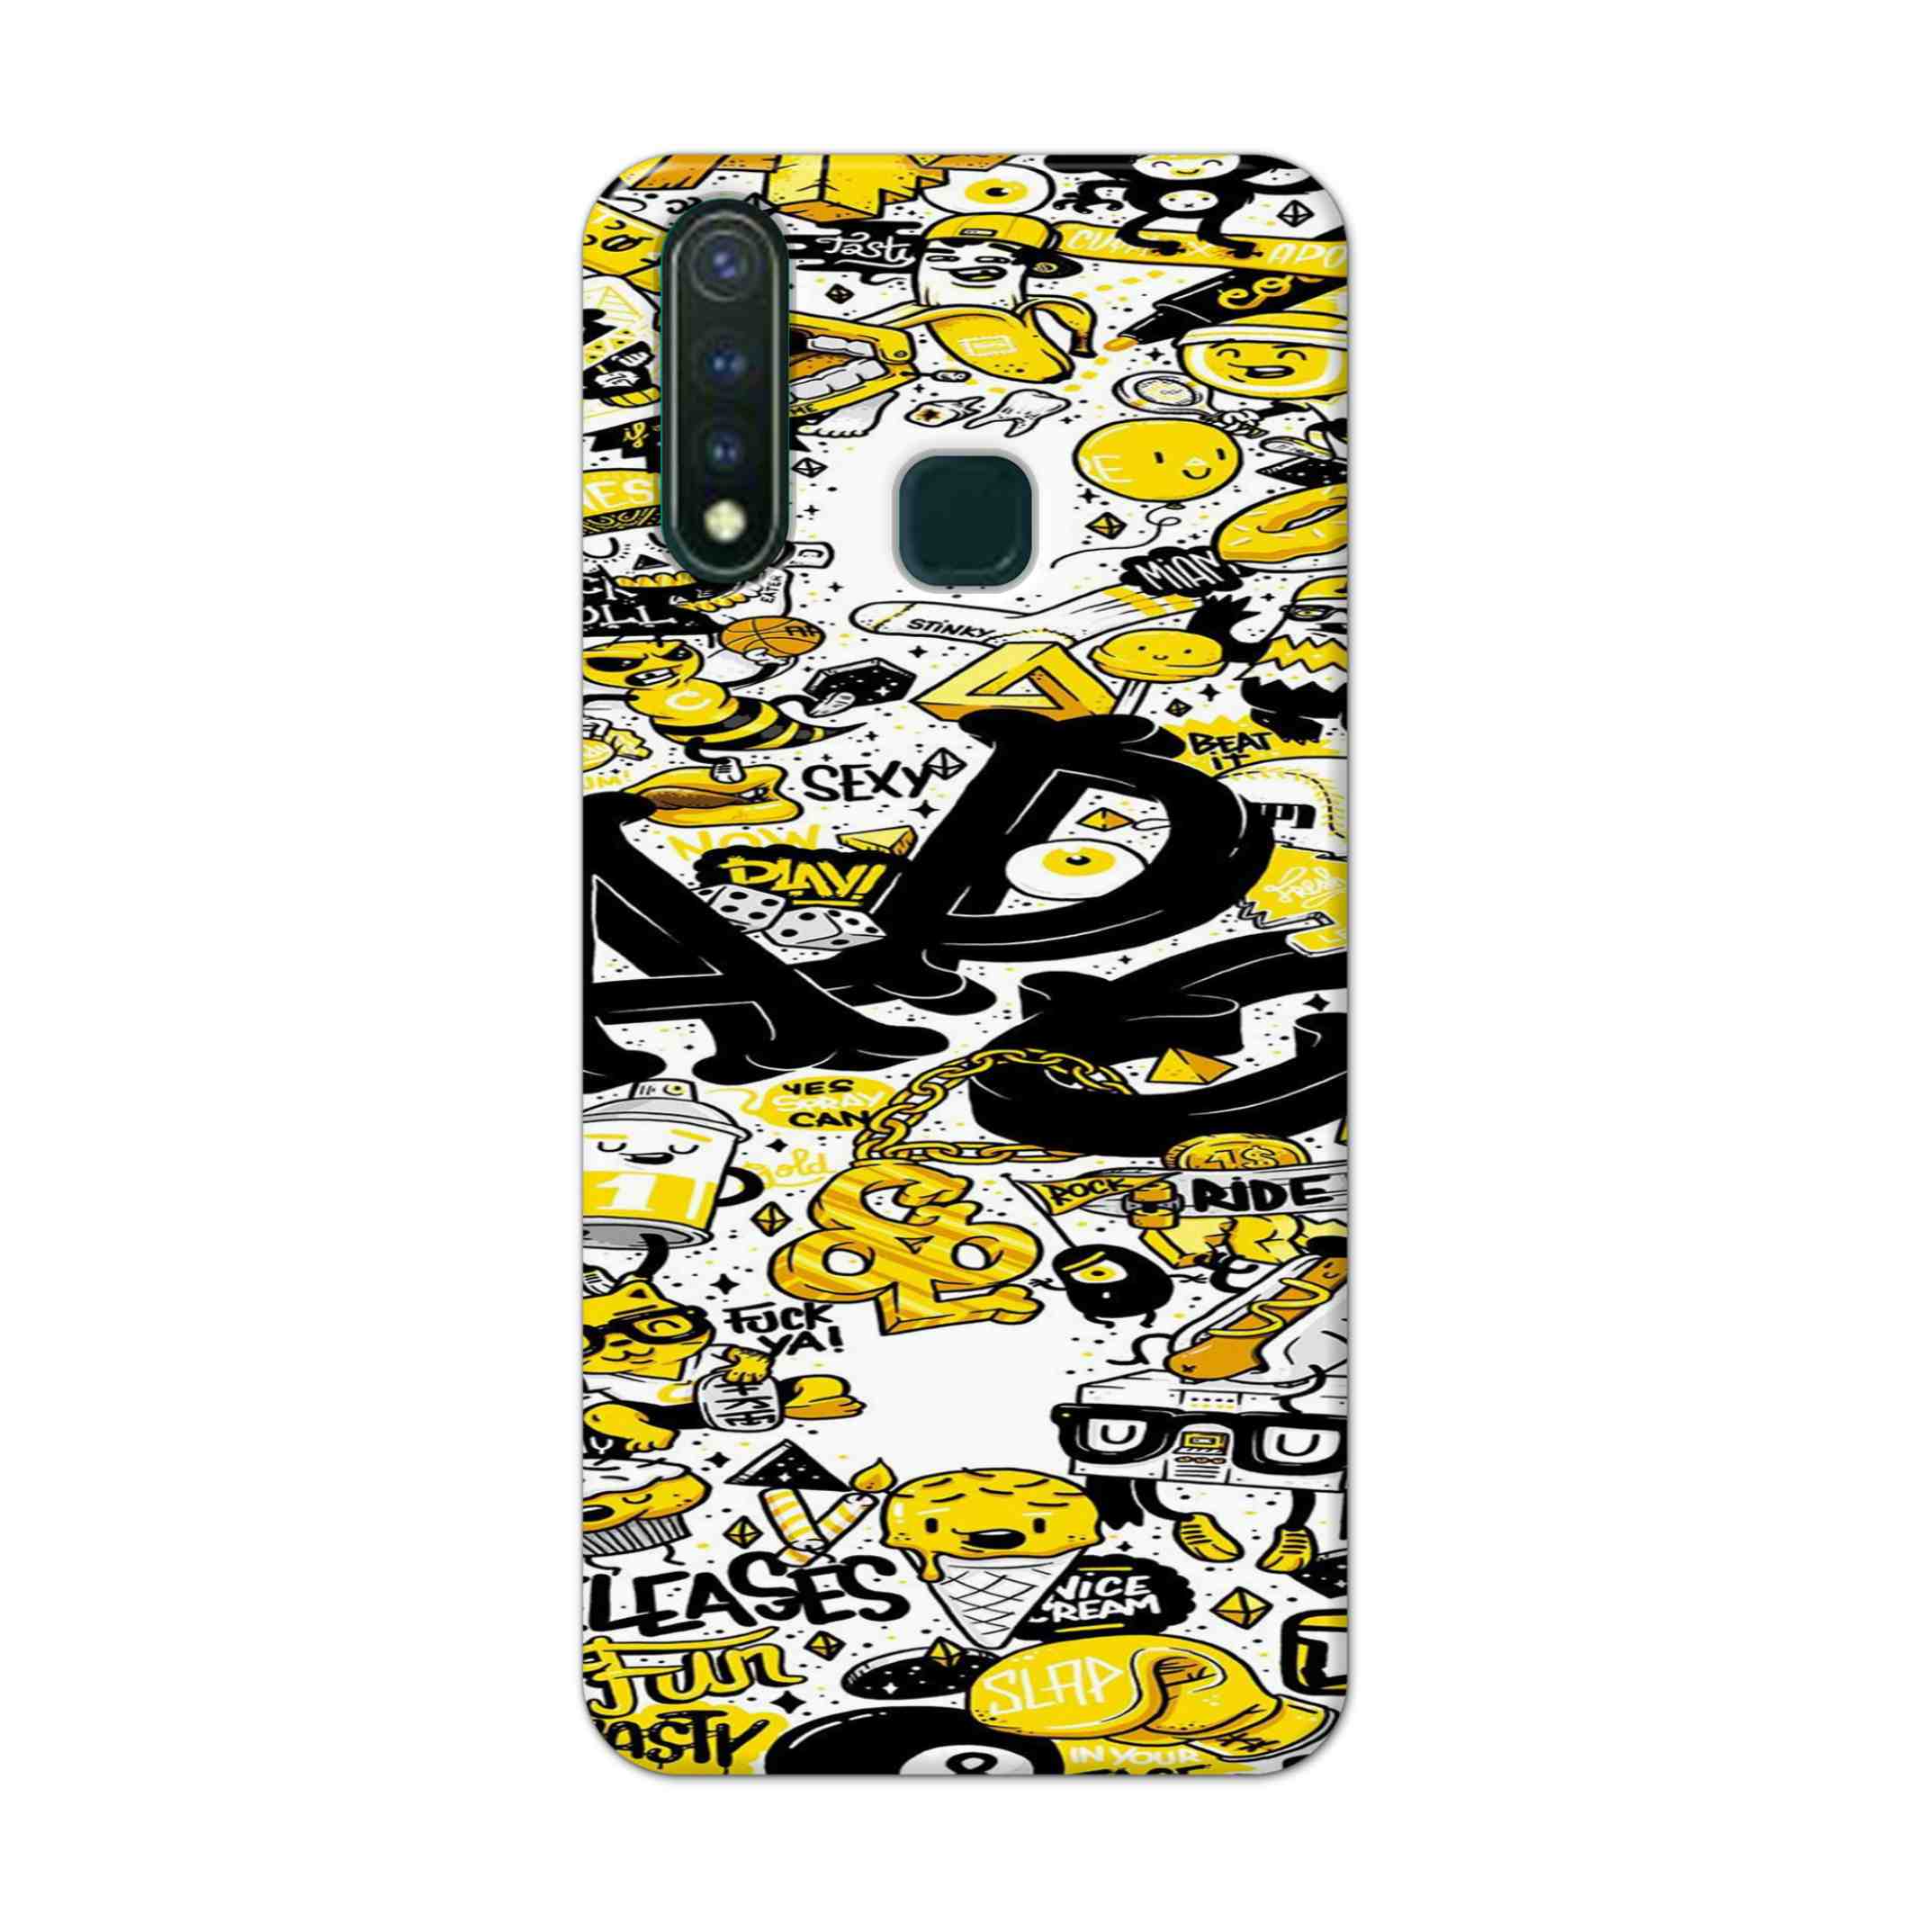 Buy Ado Hard Back Mobile Phone Case Cover For Vivo Y19 Online